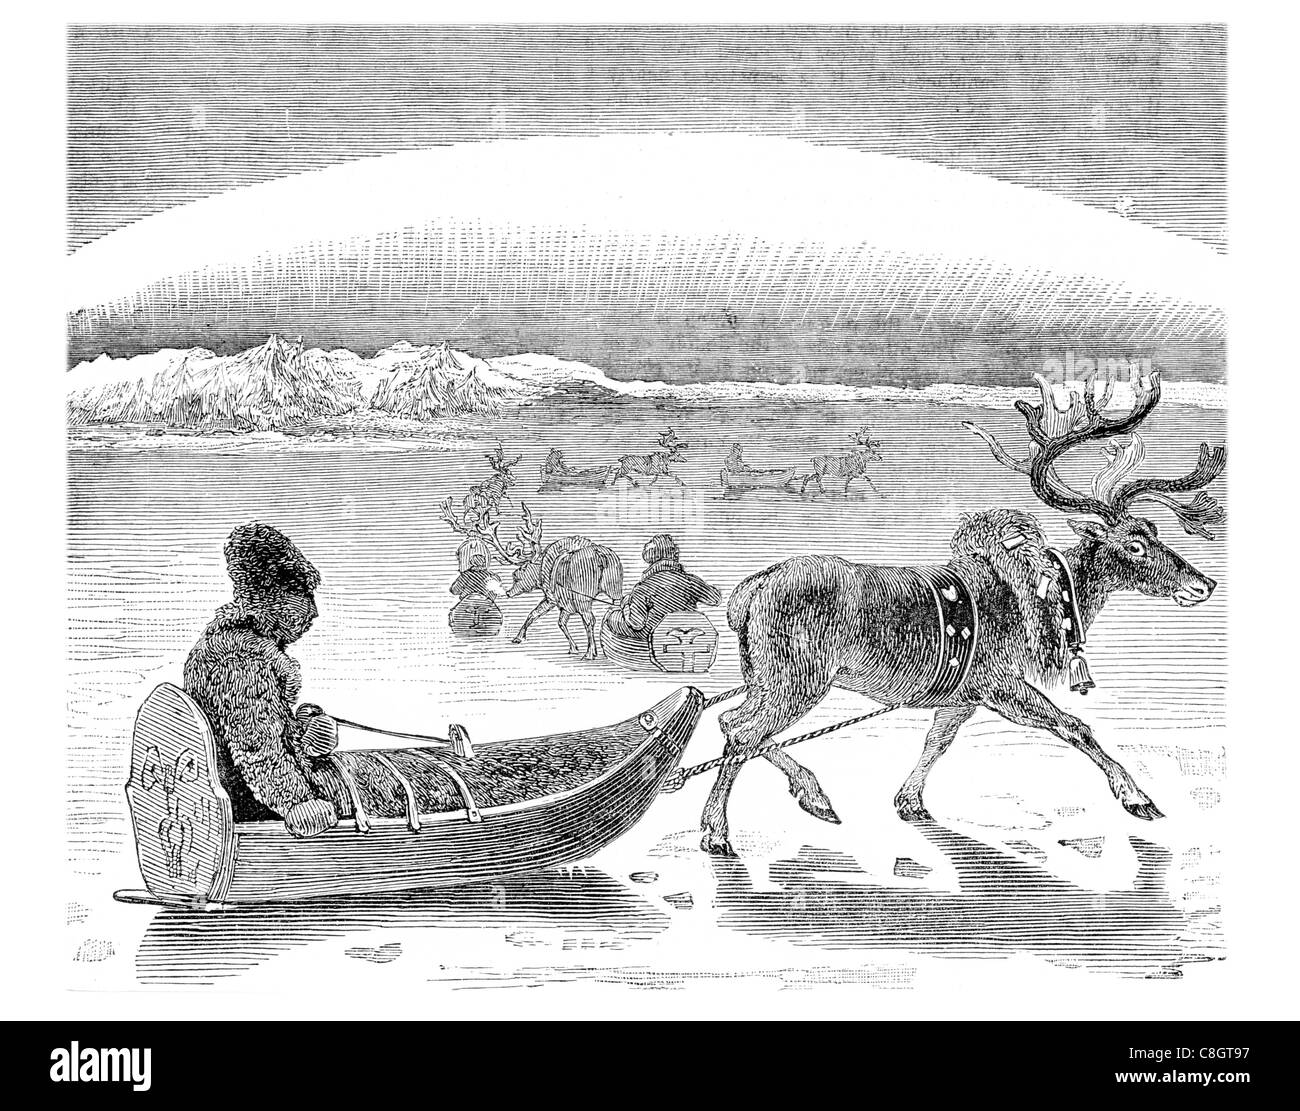 sled sledge sleigh vehicle snow ice sleds transport passenger cargo Santa Claus reindeer antler fur coat saddle reign Stock Photo